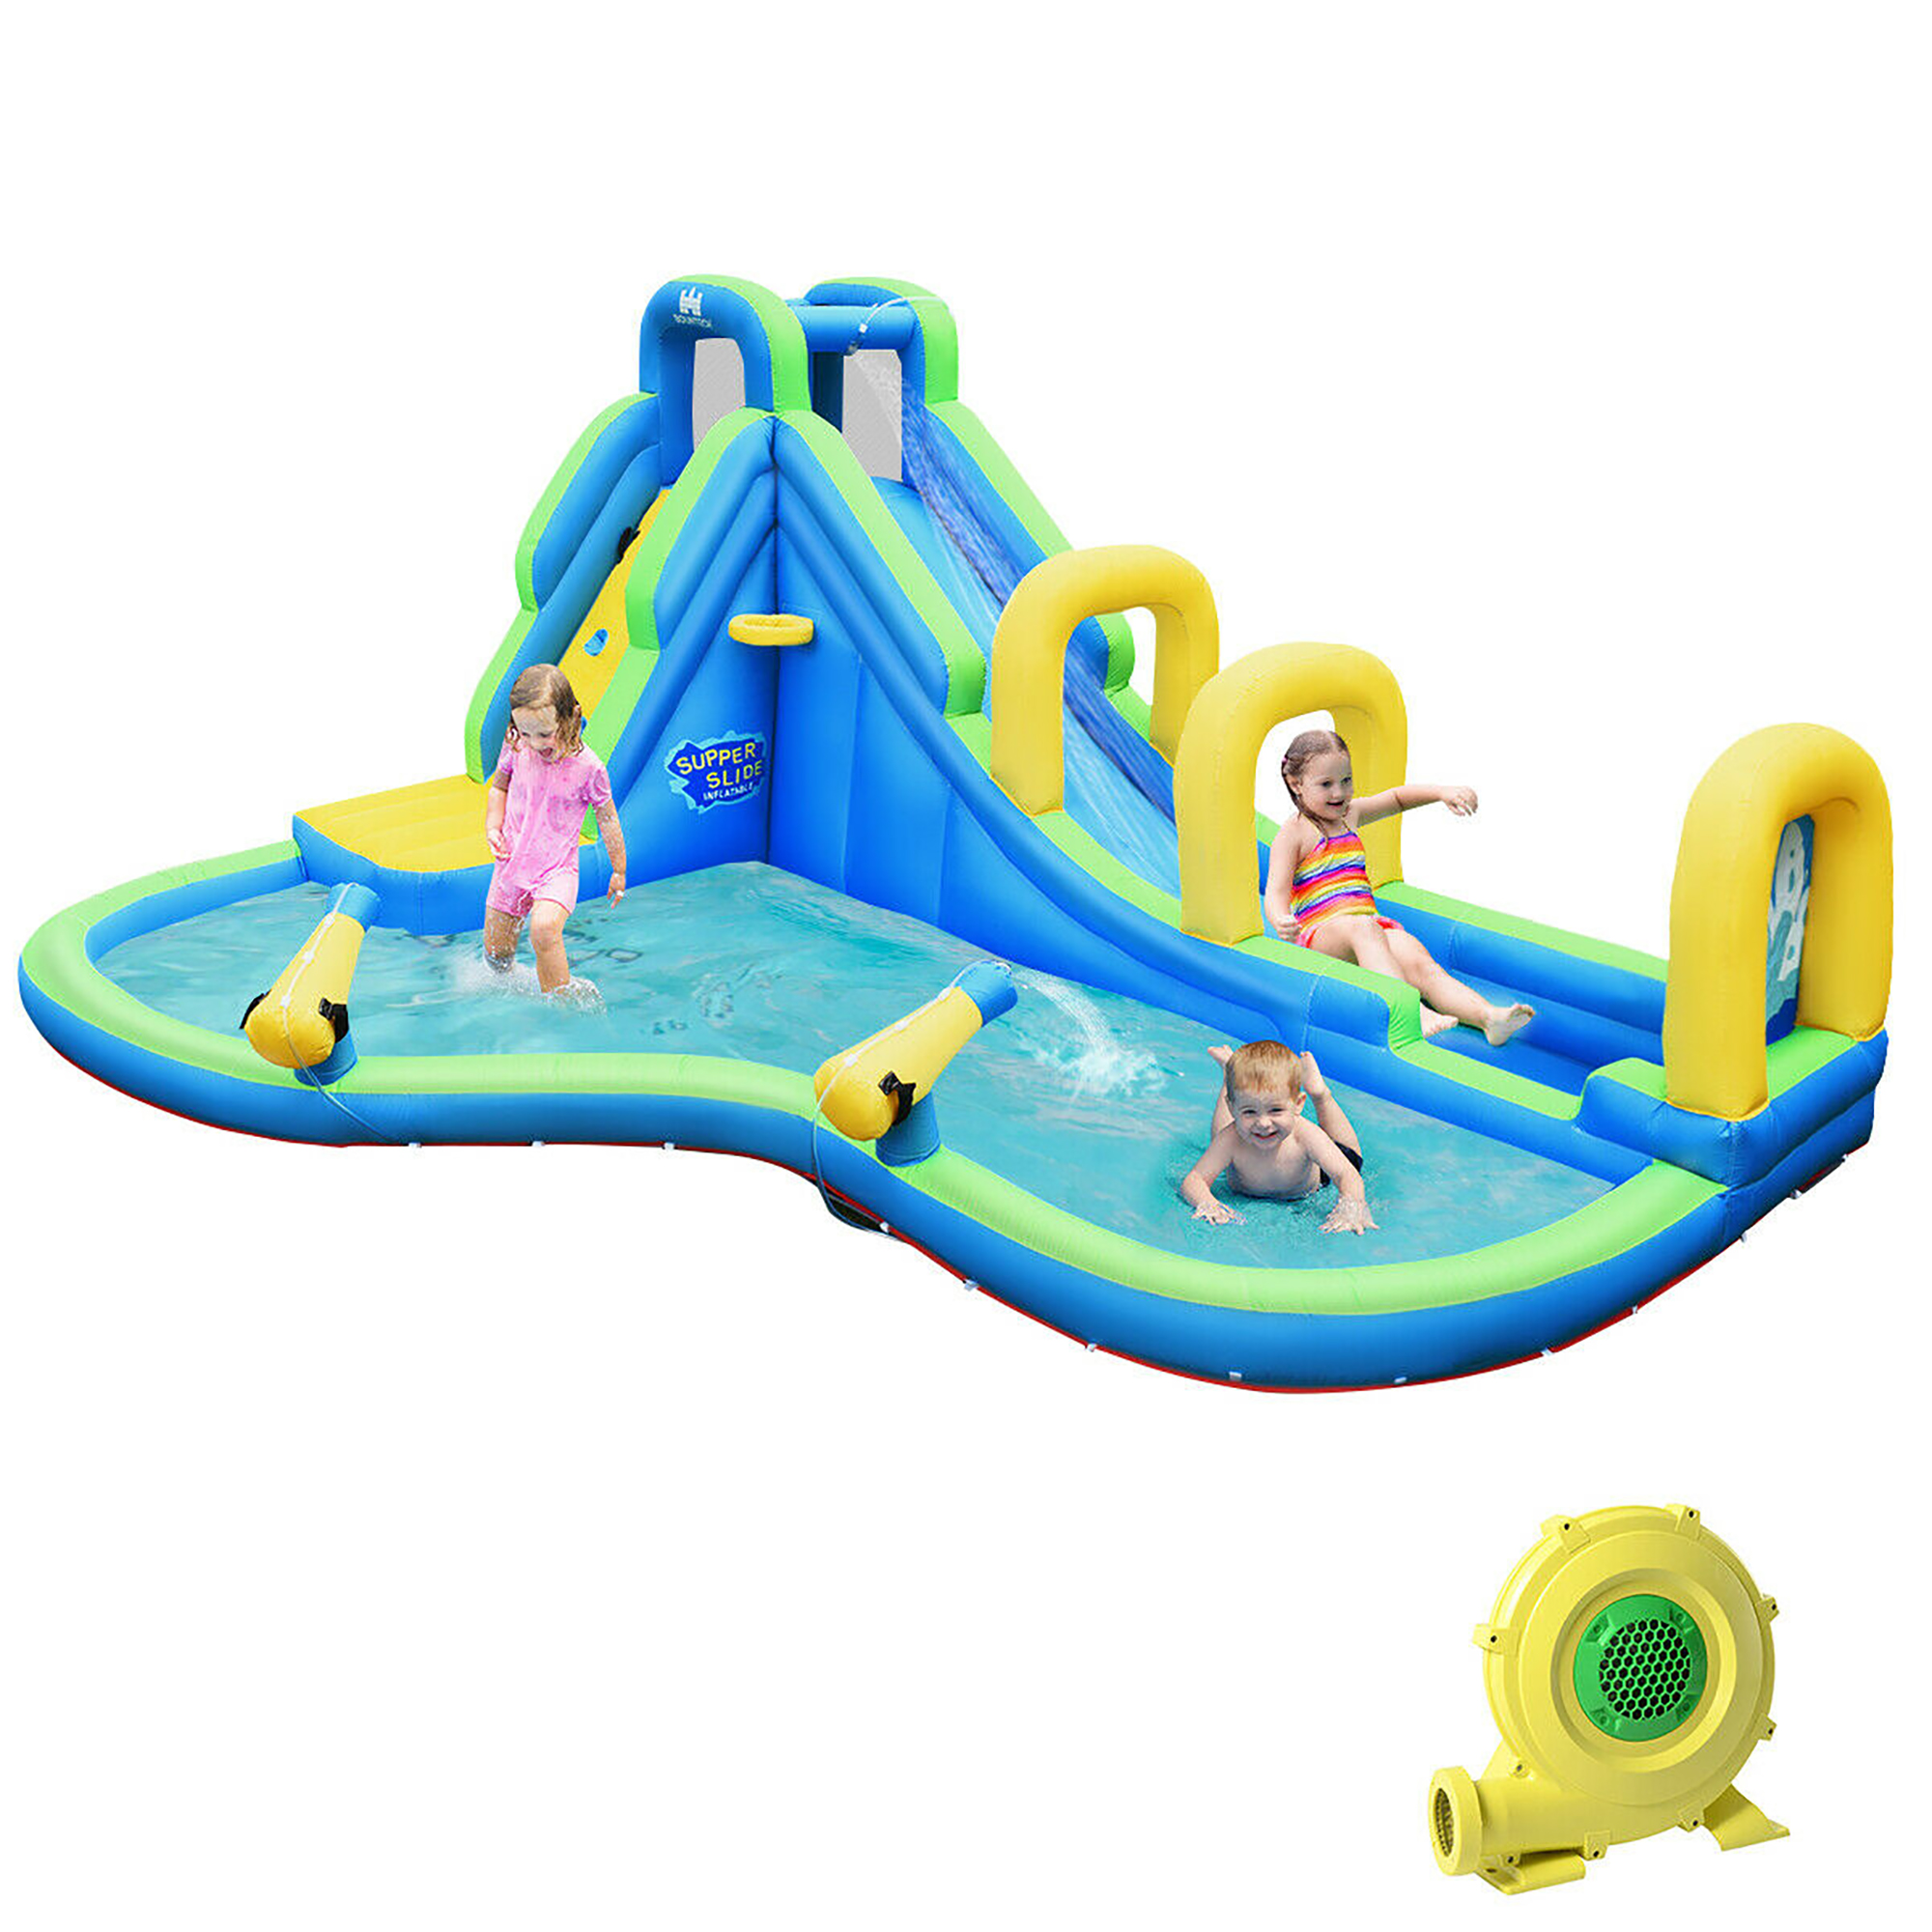 Costway Inflatable Water Slide Kids Bounce House Castle Splash Water Pool W/ 750W Blower - image 1 of 10